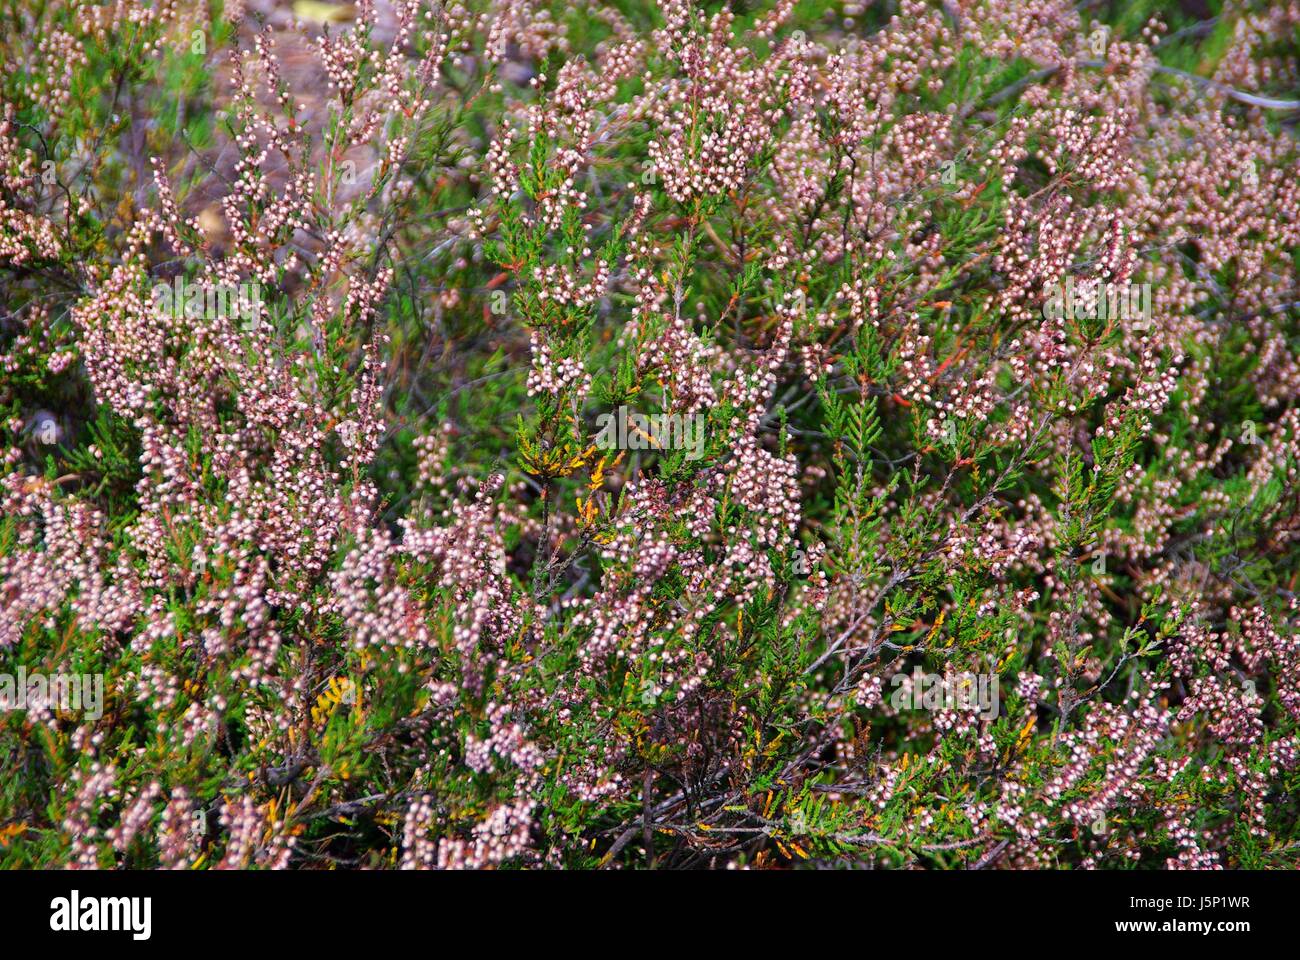 bloom blossom flourish flourishing hike go hiking ramble bush heath herb Stock Photo